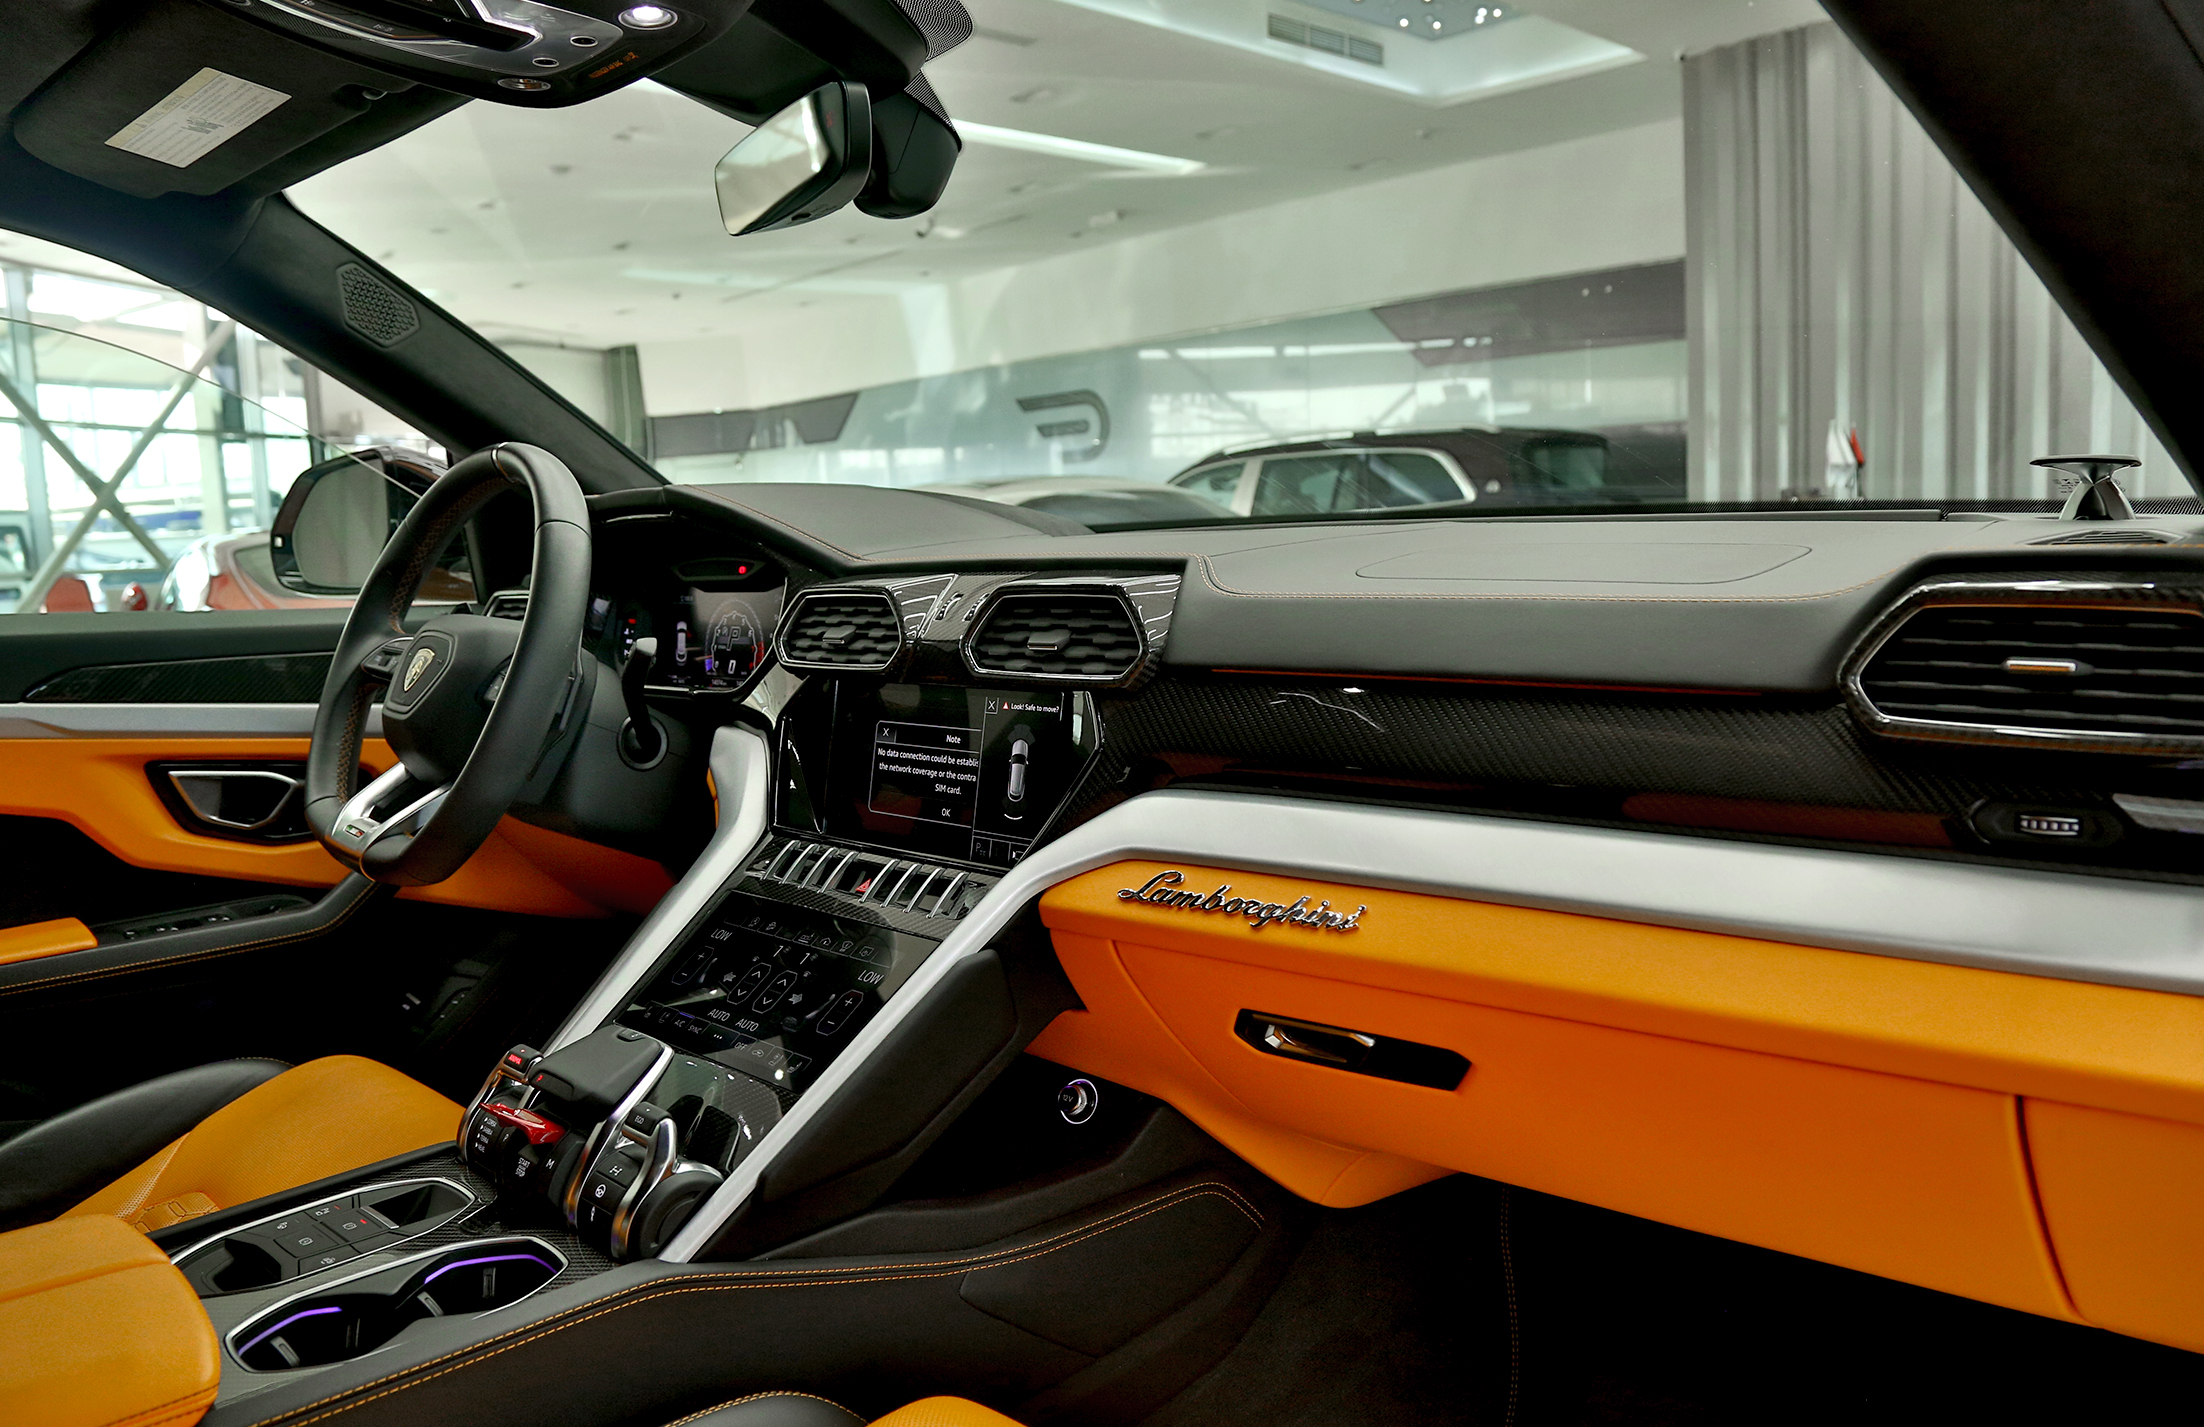 Lamborghini Urus 2021 Prestige Motor Dubai